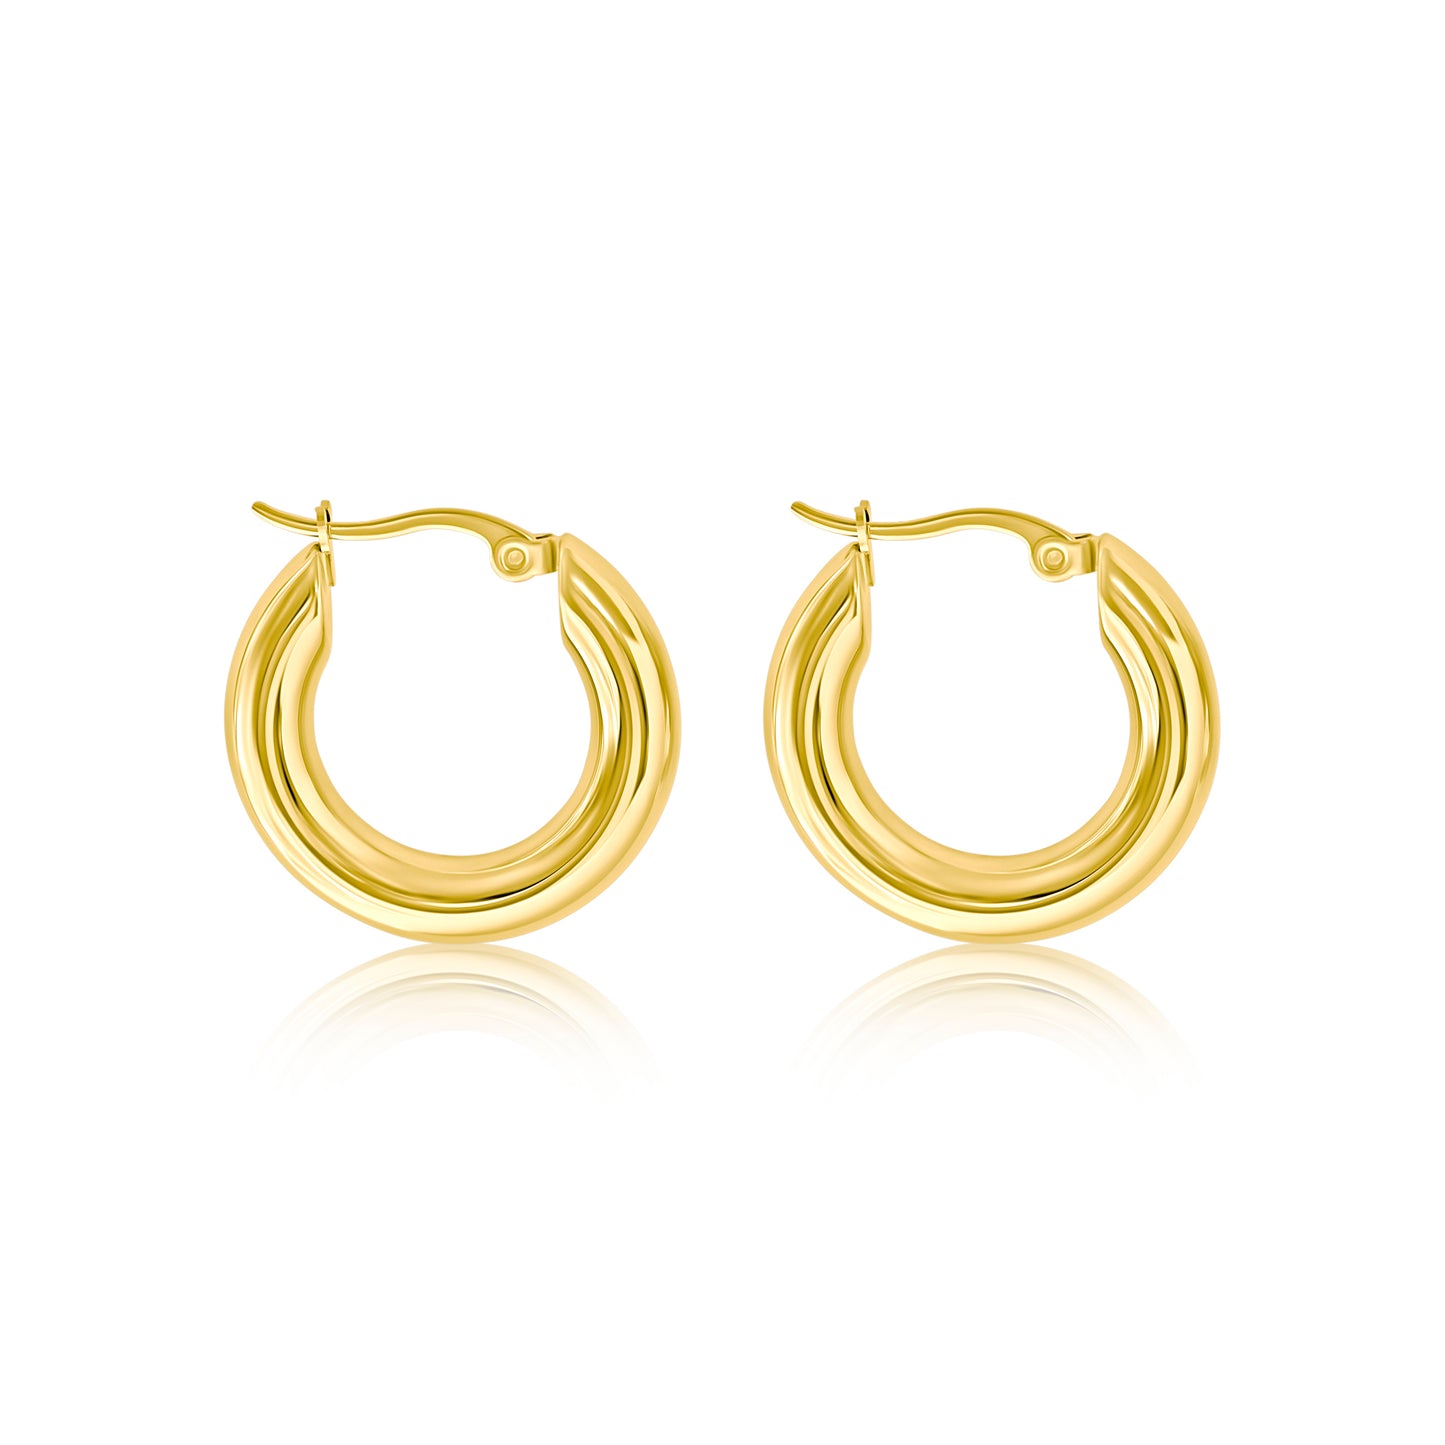 Classic Gold Hoop Earrings 18K Gold Plated Waterproof Hypoallergenic Stainless Steel Fashion Jewelry for Women. B-Xquisite Jewelry Earrings